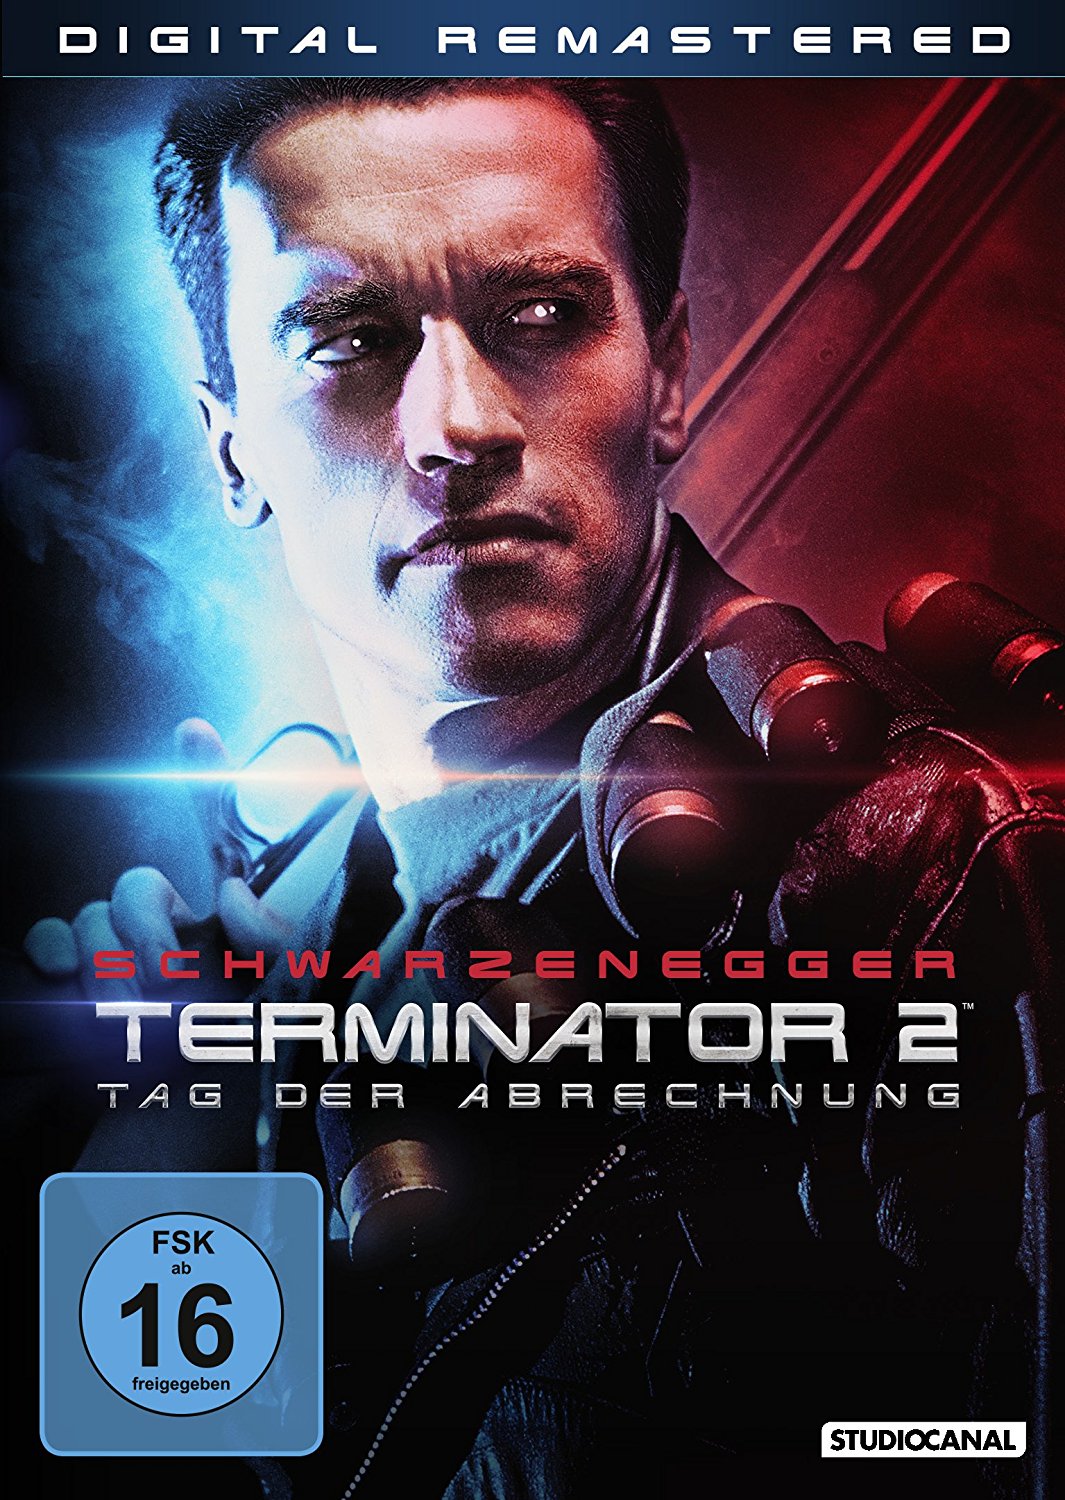 Terminator 2: Digital Remastered